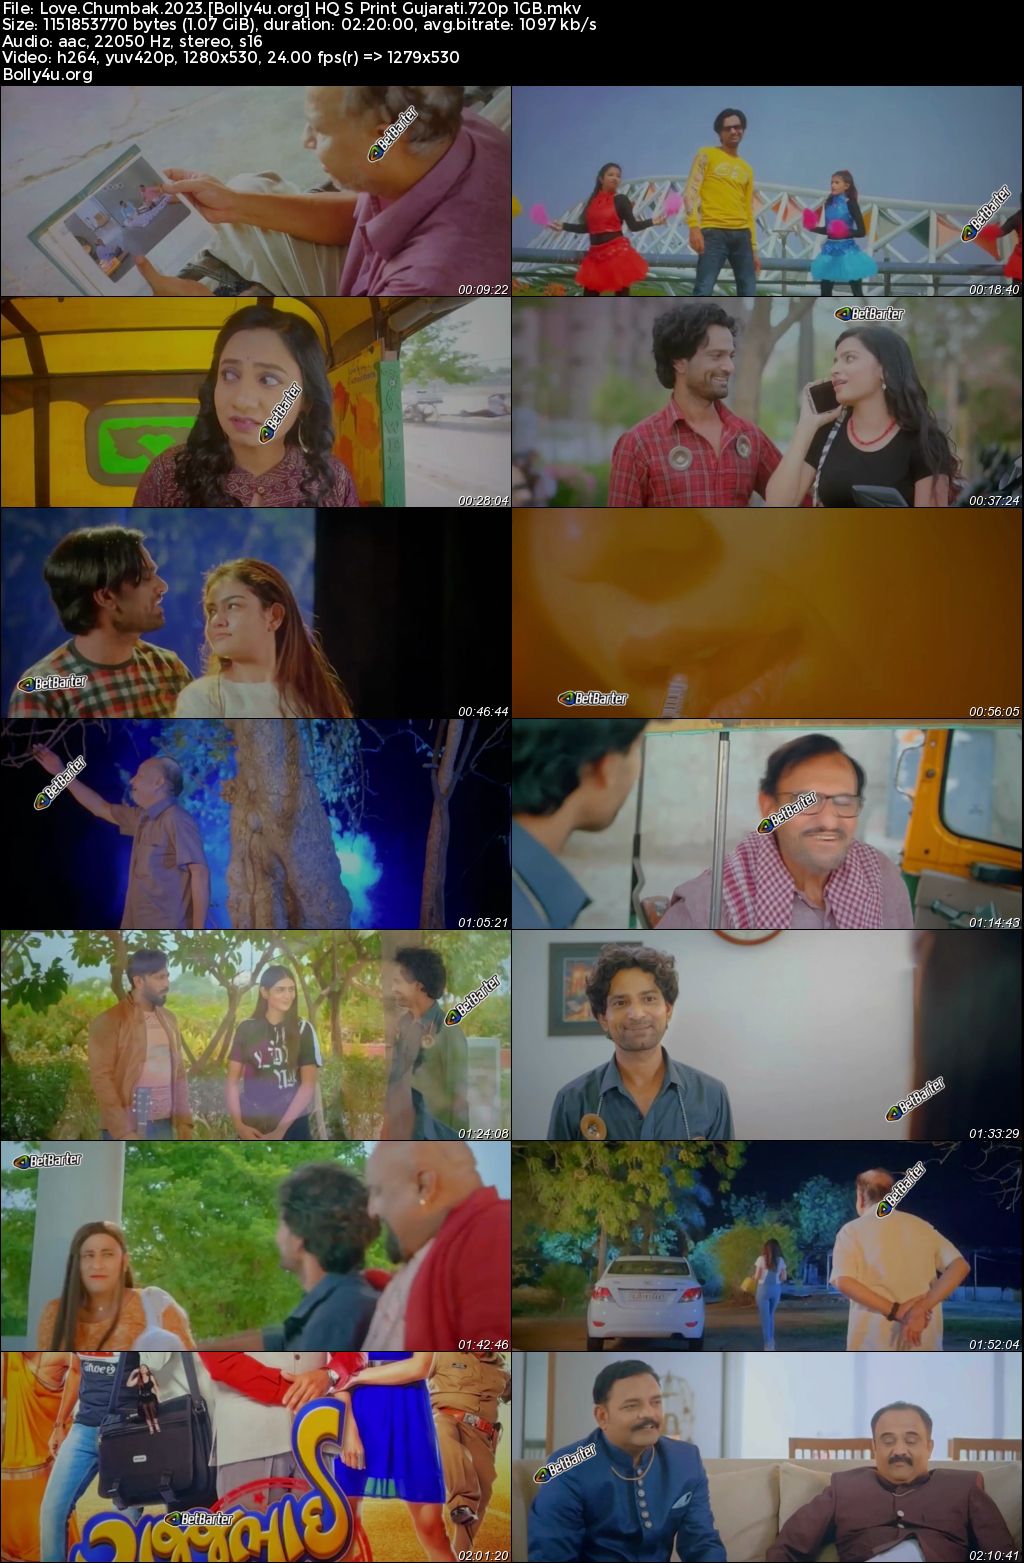 Love Chumbak 2023 HQ S Print Gujarati Full Movie Download 720p 480p